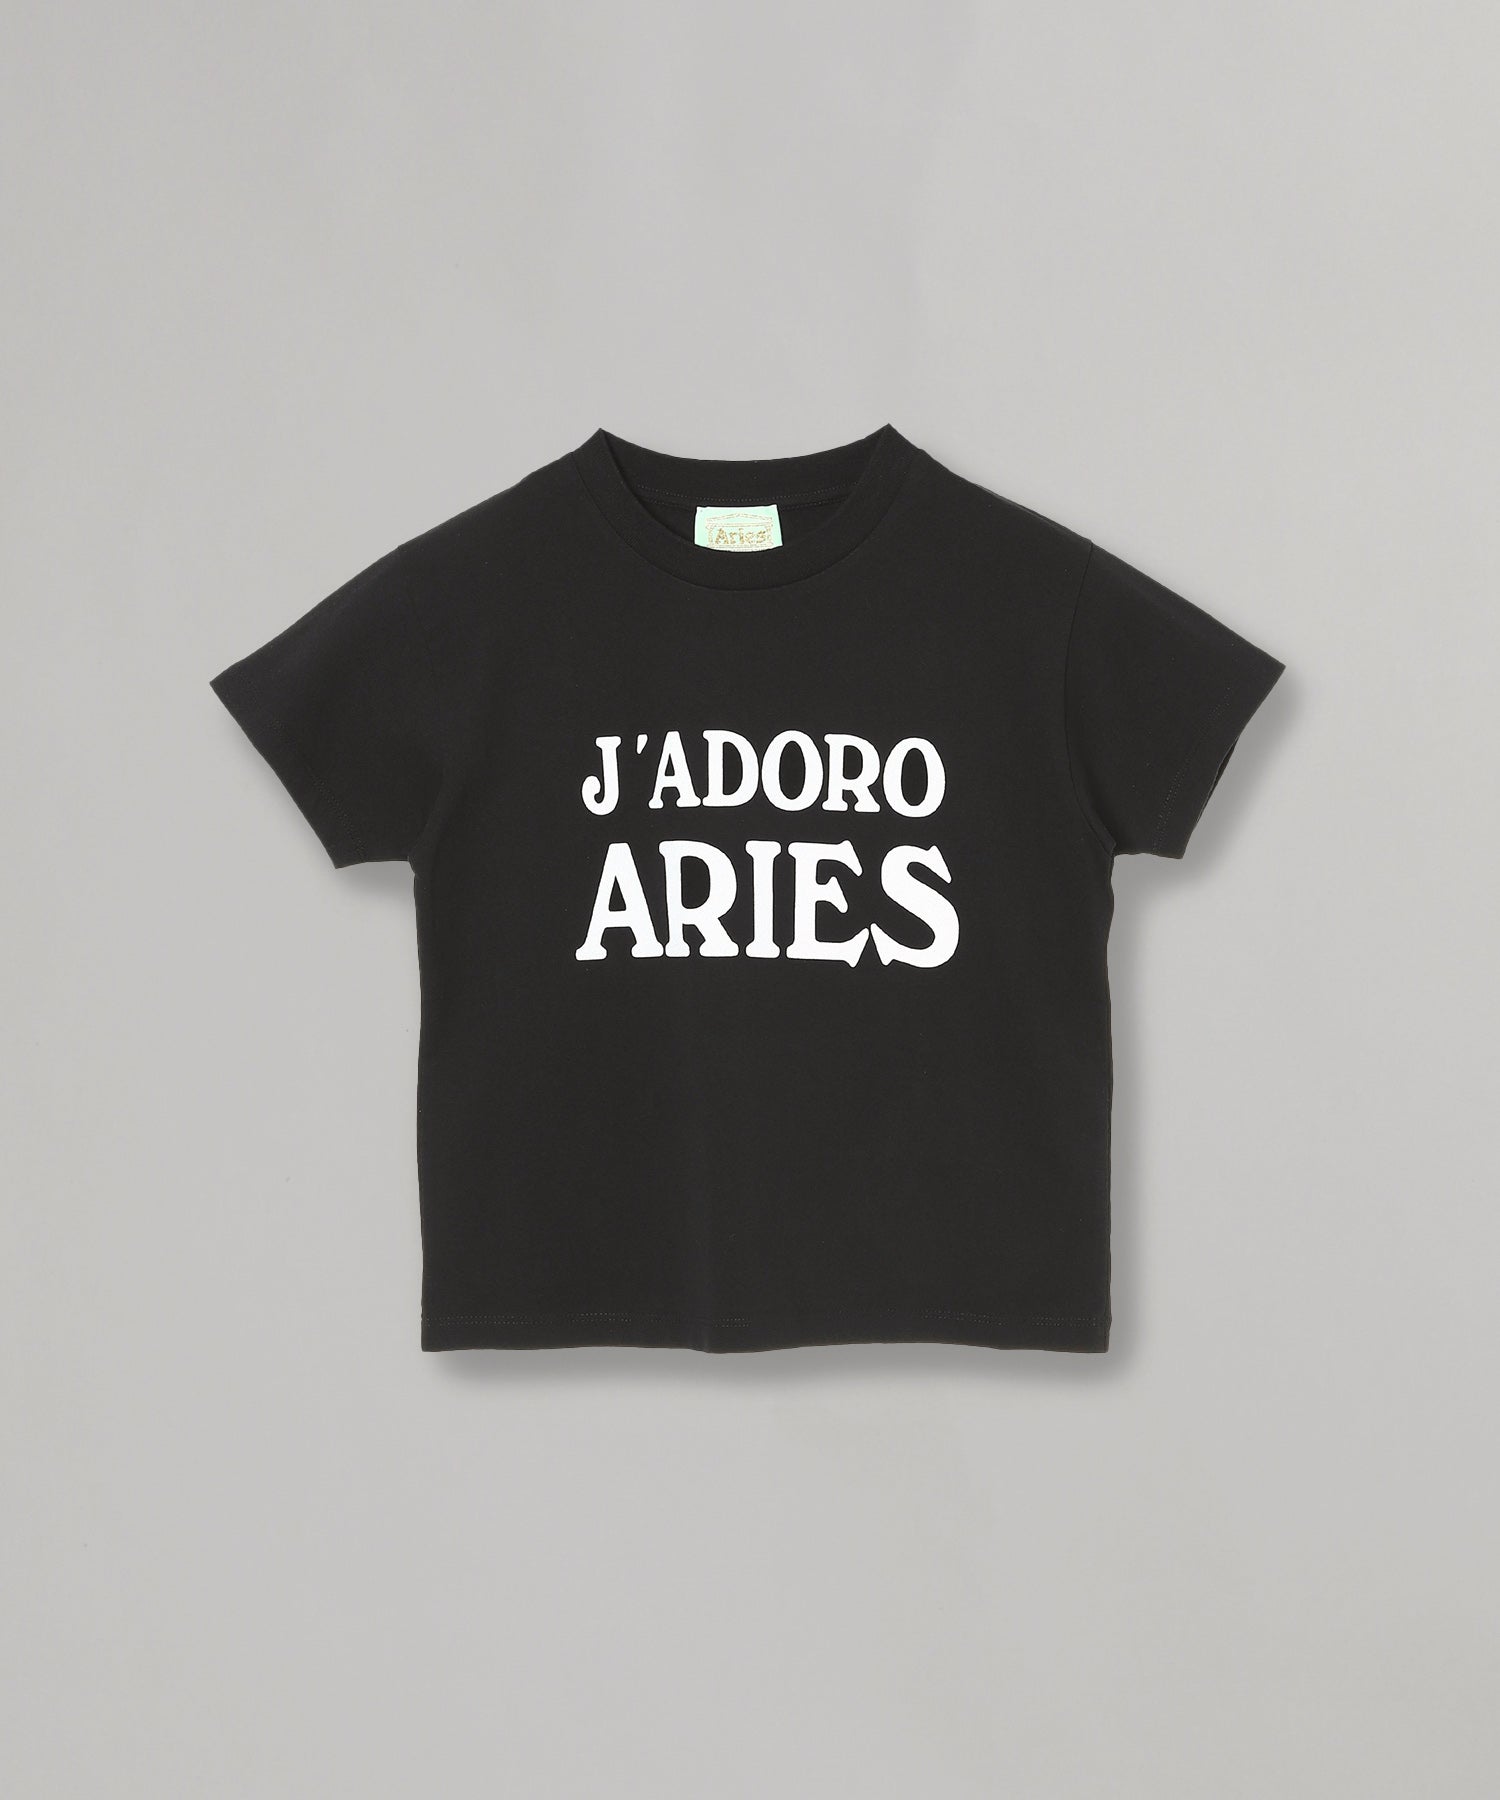 Jadoro Aries Ss Tee - Baby